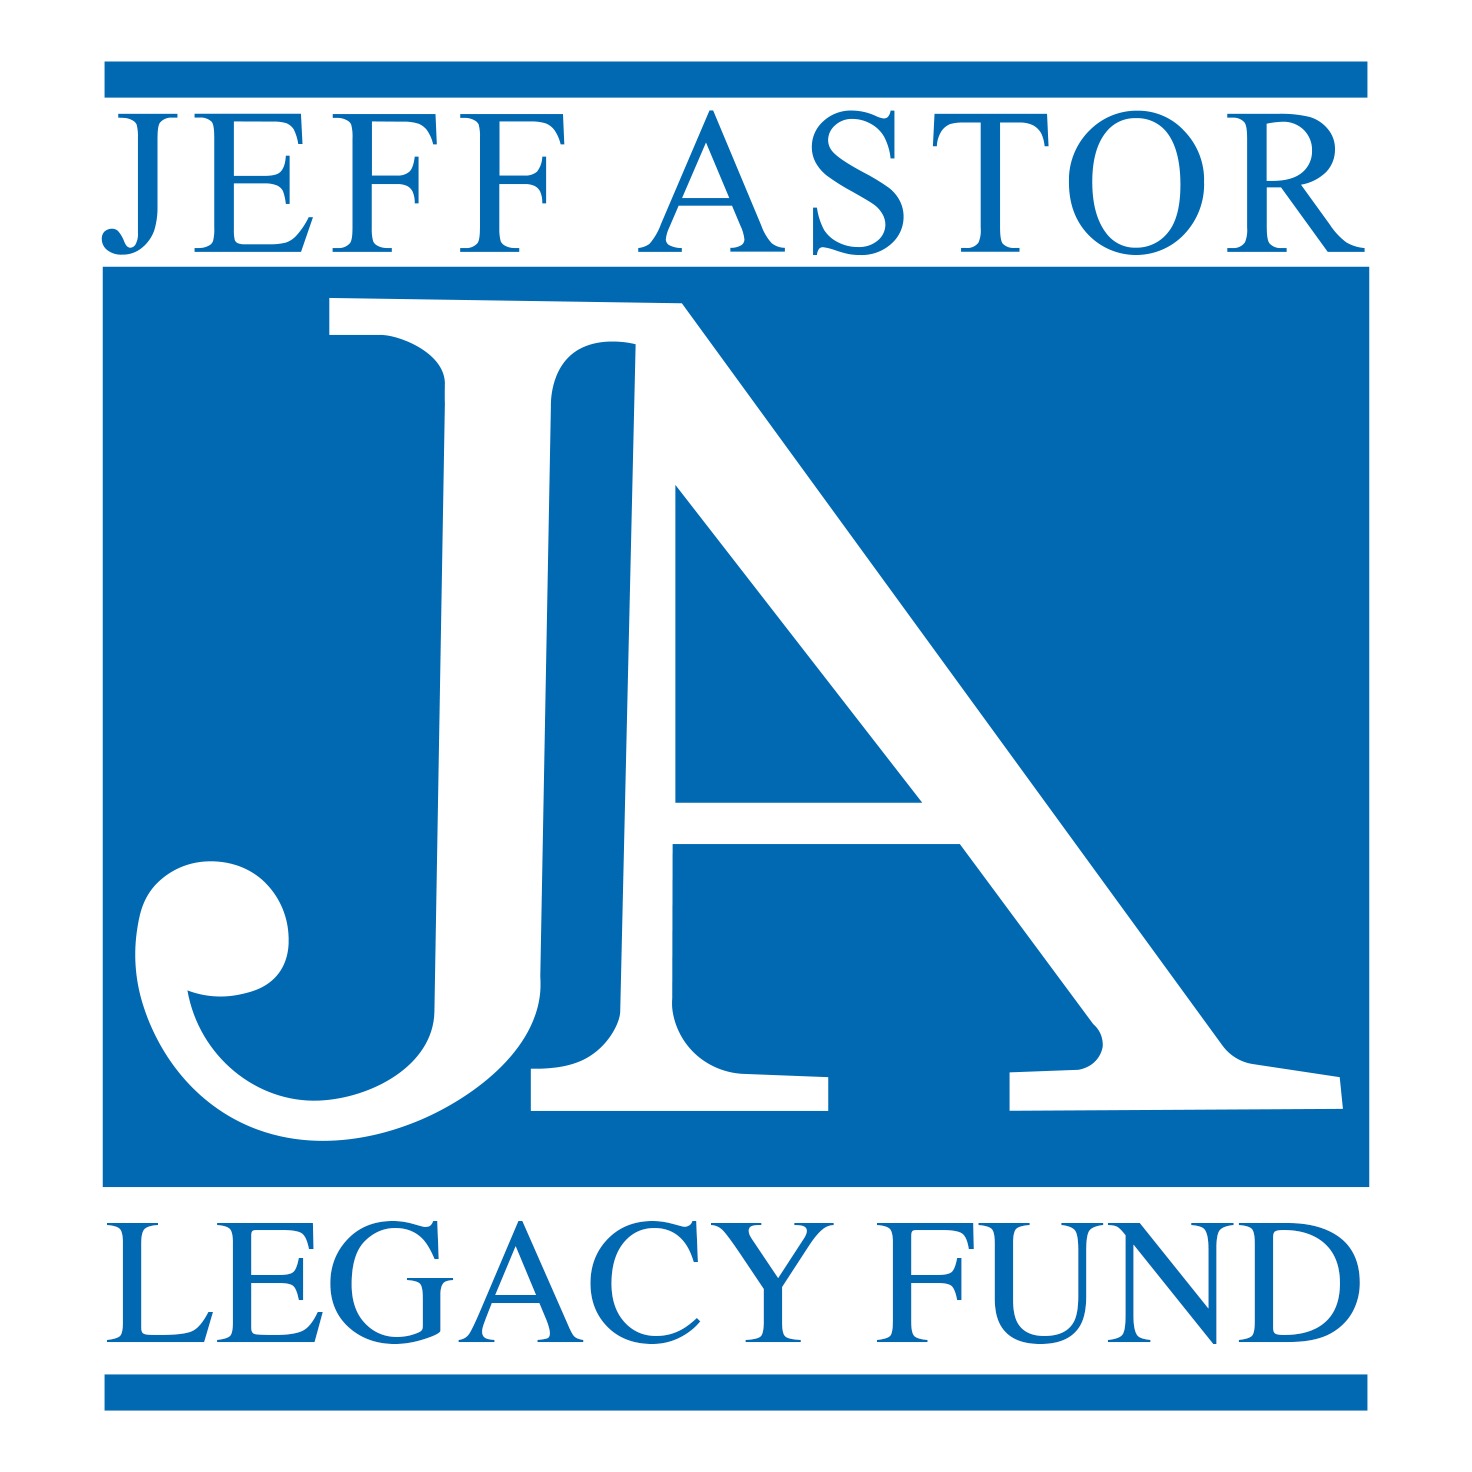 Jeff Astor Foundation